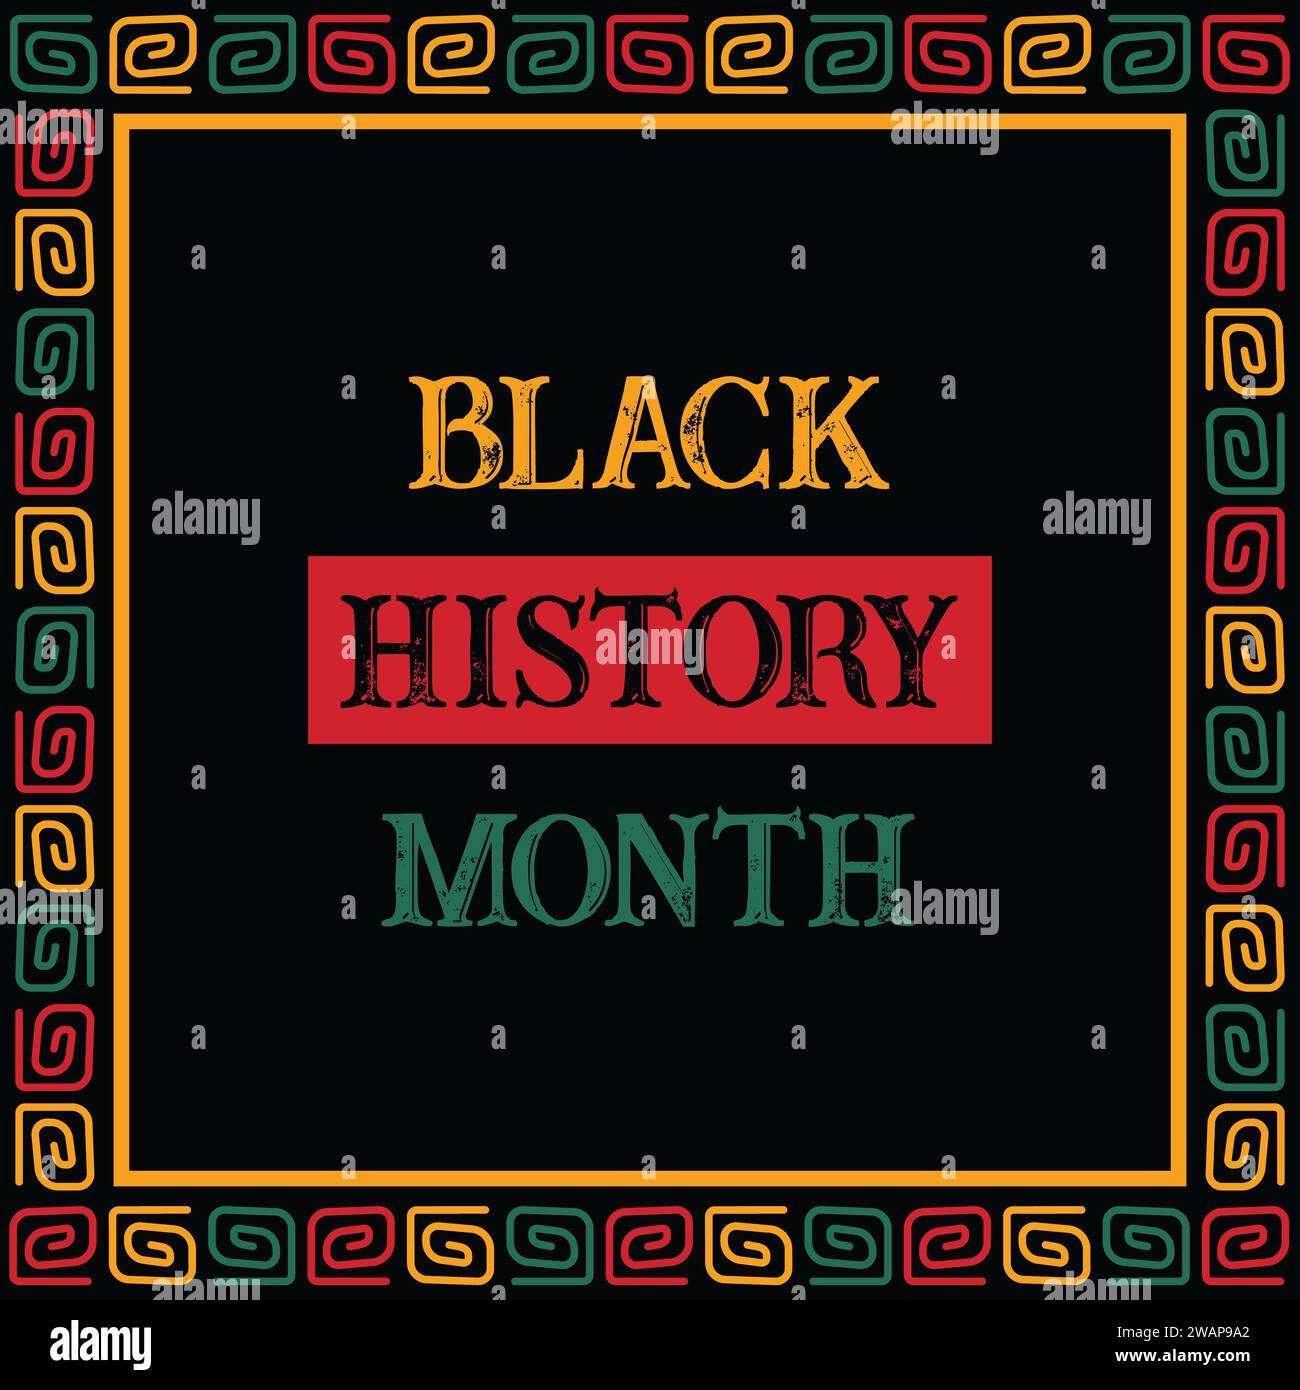 Black History Month Flat Illustration Stock Photo